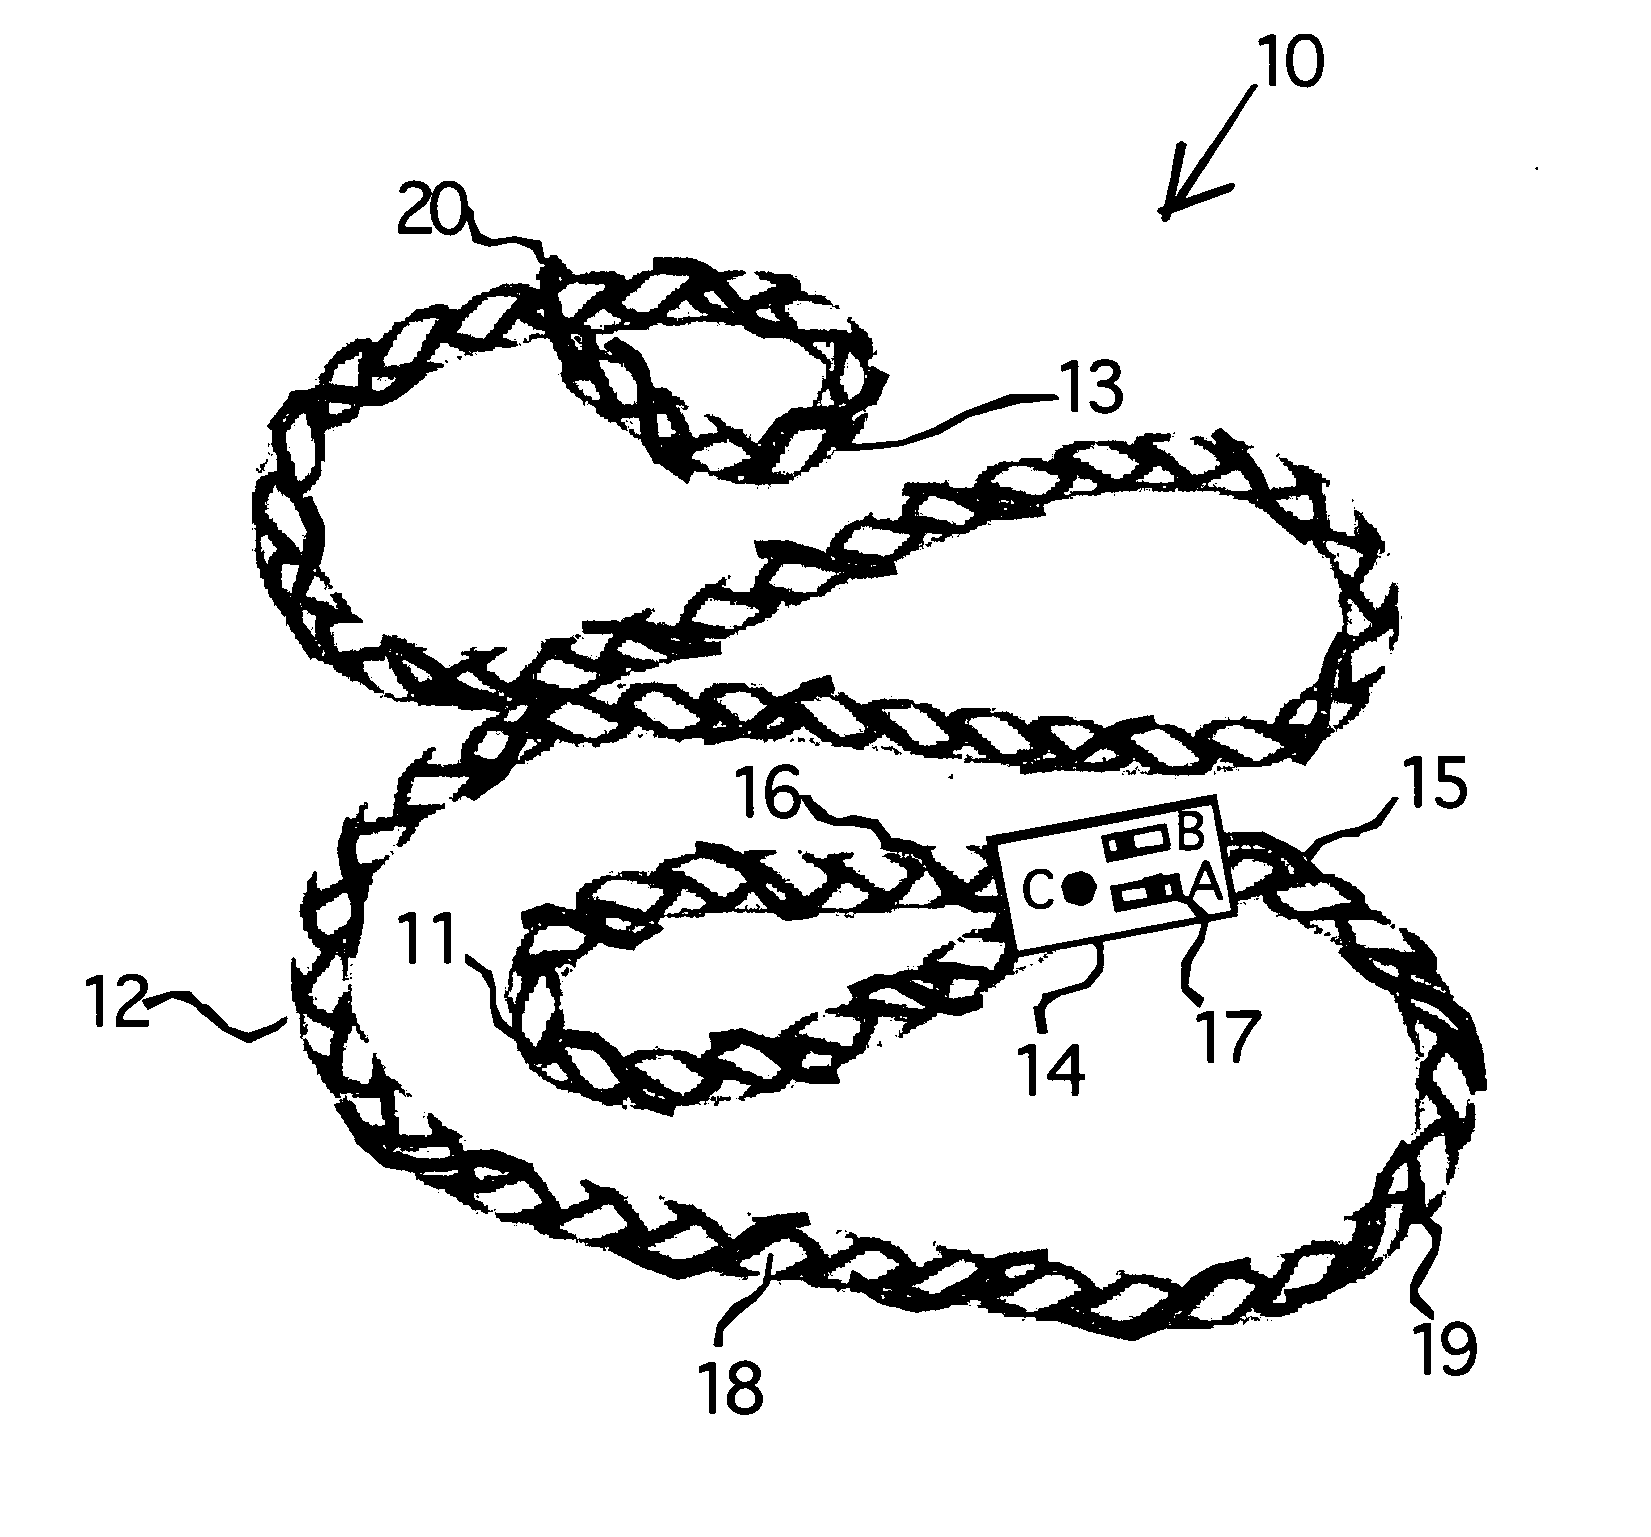 Electroluminescent braided pet leash